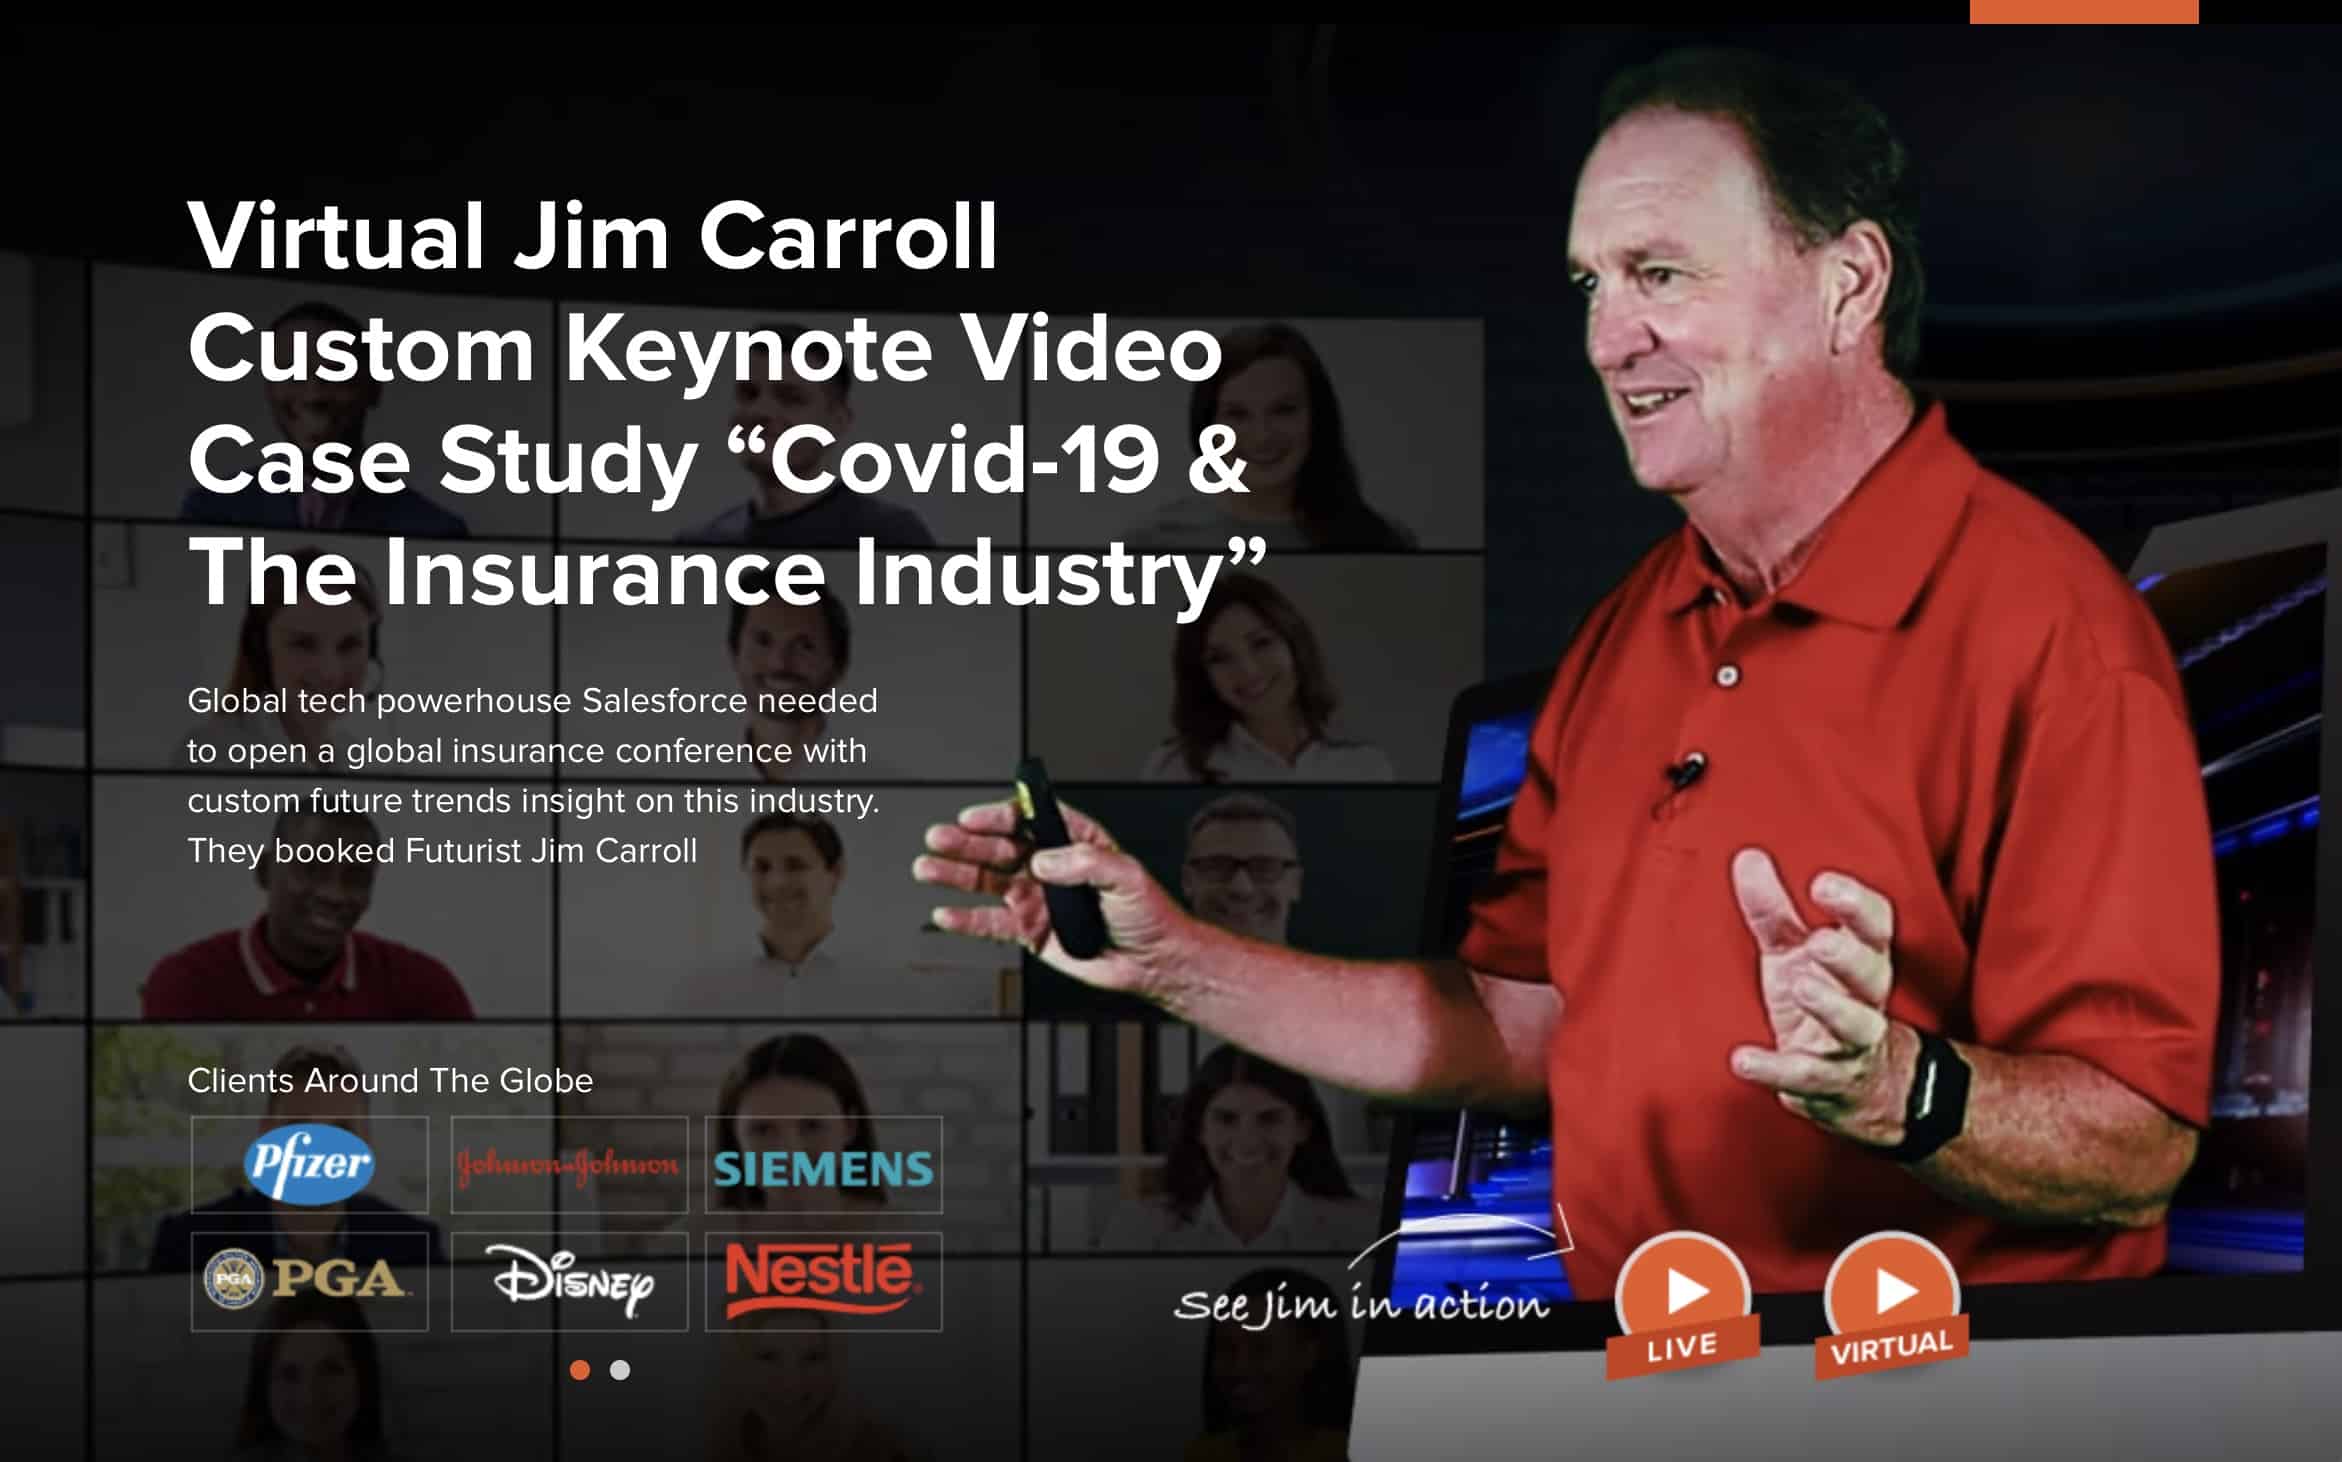 Custom Keynote Video Case Study “Covid-19 & The Insurance Industry”